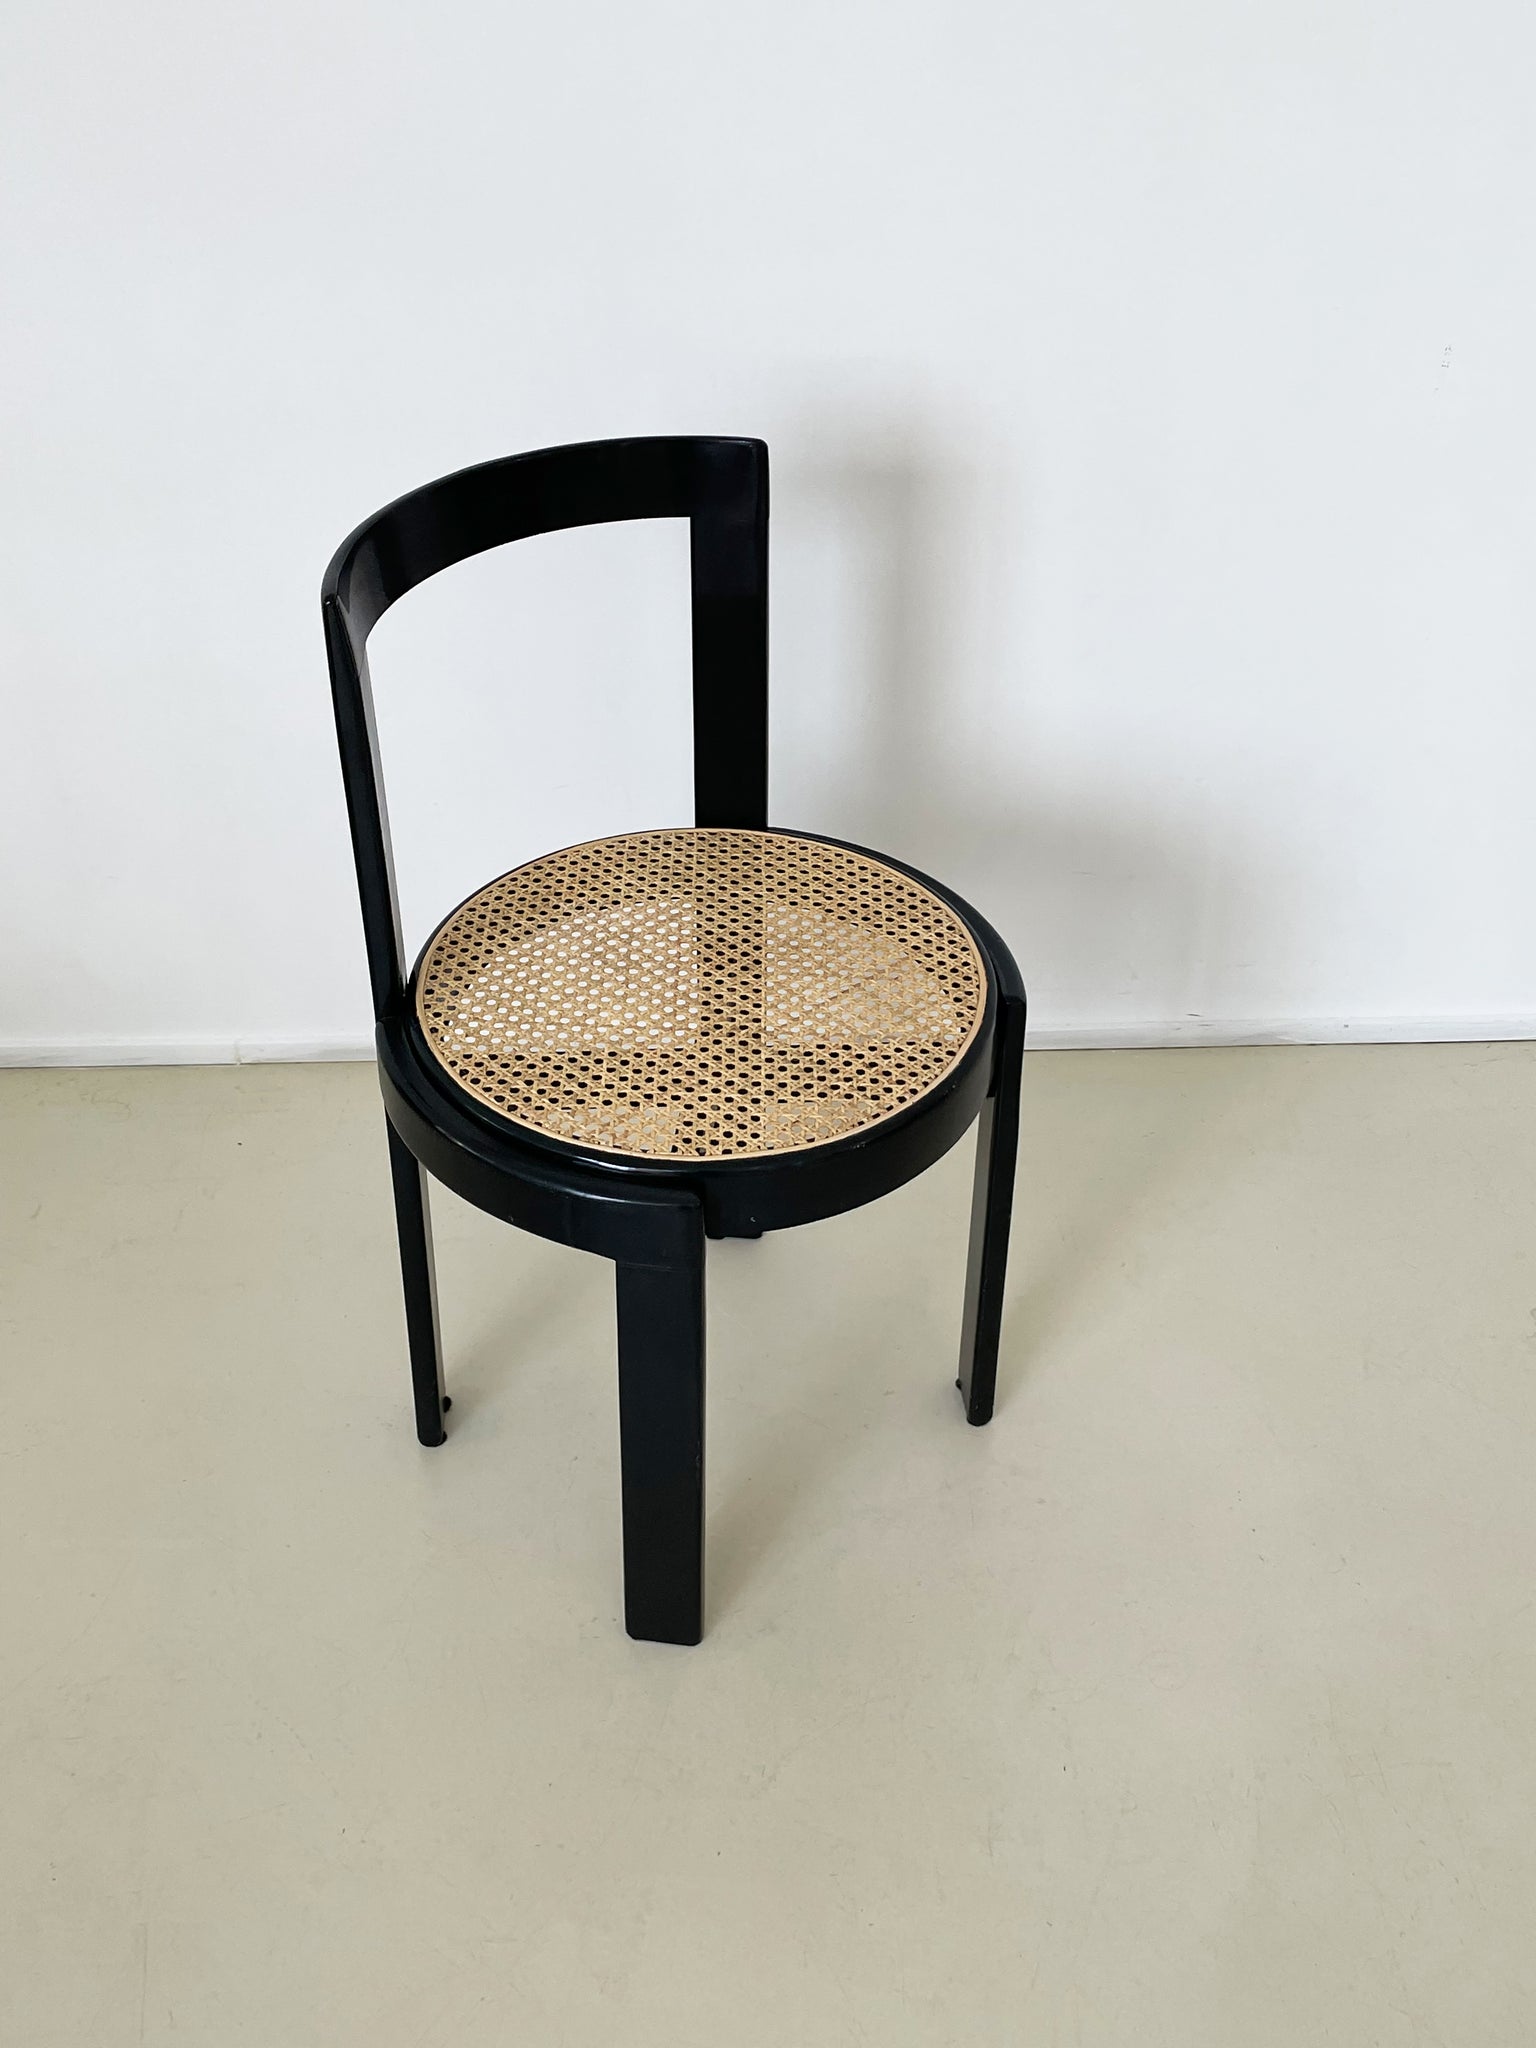 1970s Italian Cane Round Chair